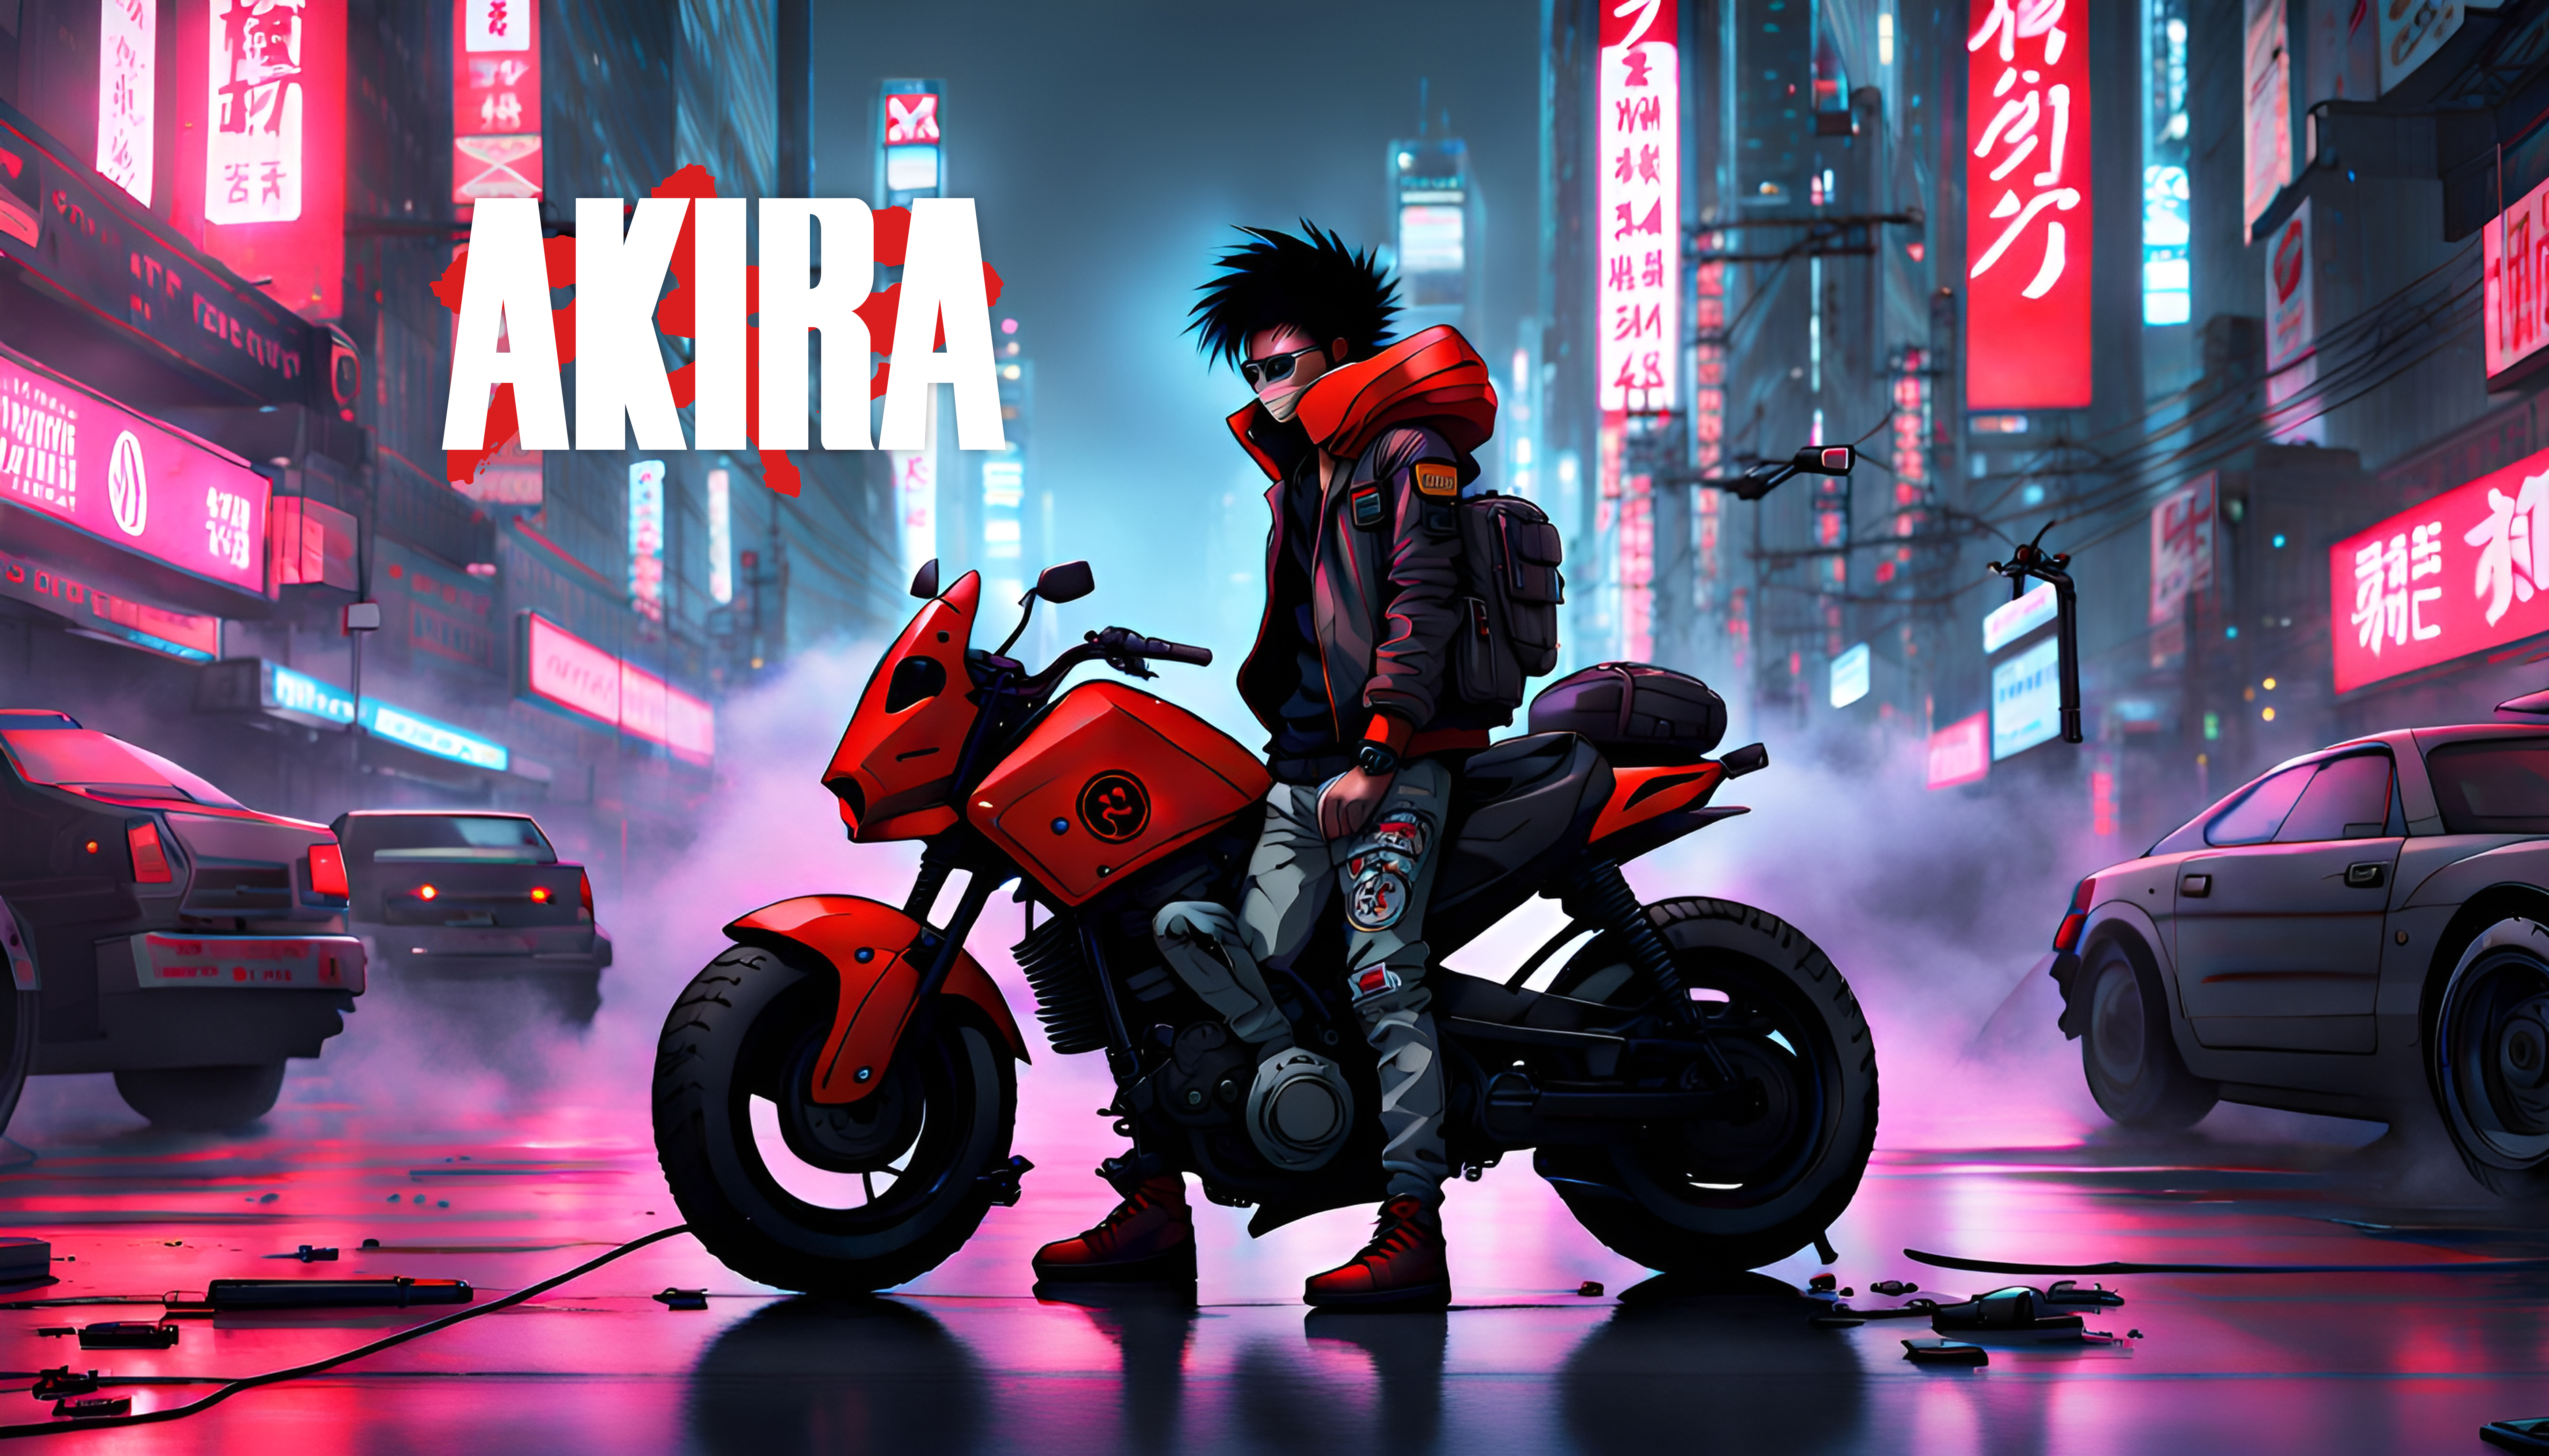 Anime Akira 8k Ultra HD Wallpaper by kingbonj